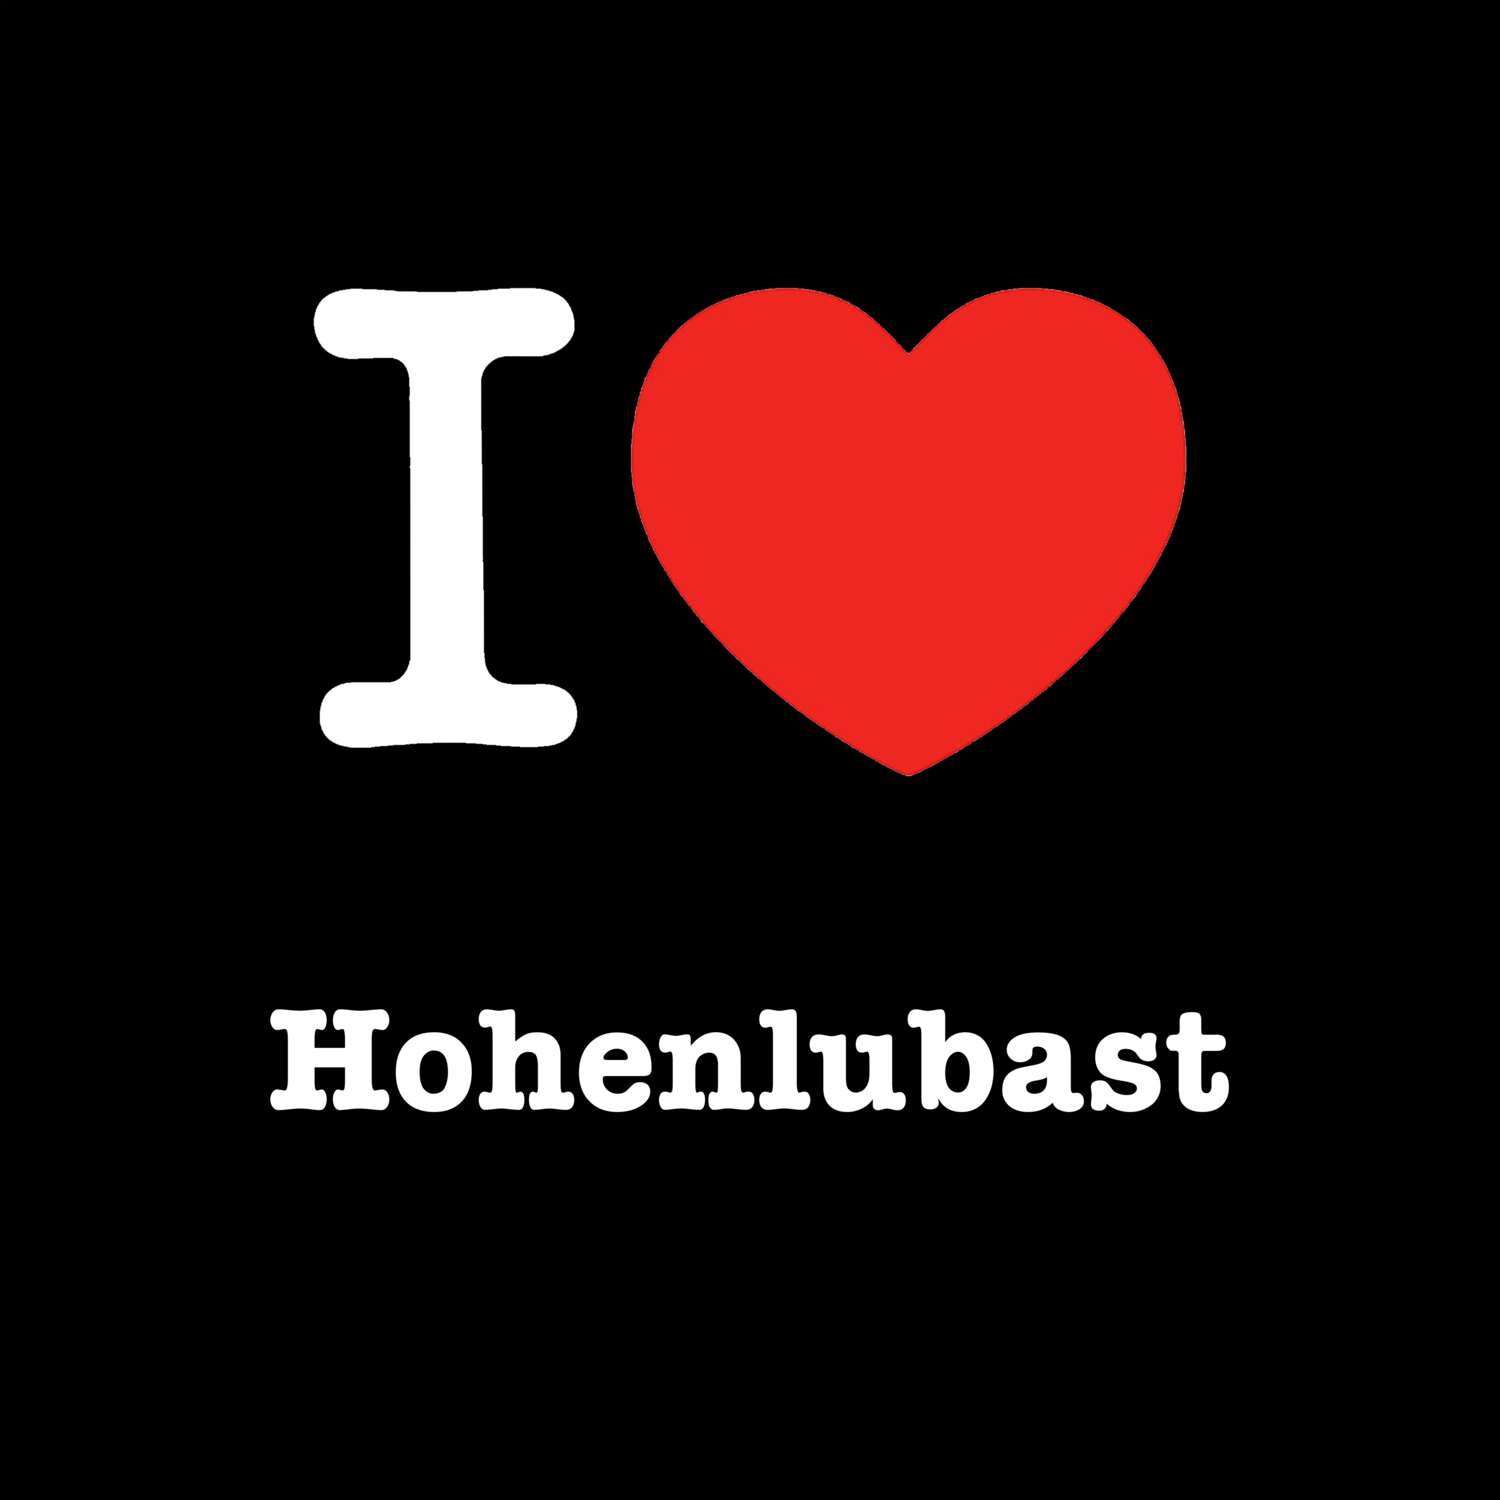 Hohenlubast T-Shirt »I love«